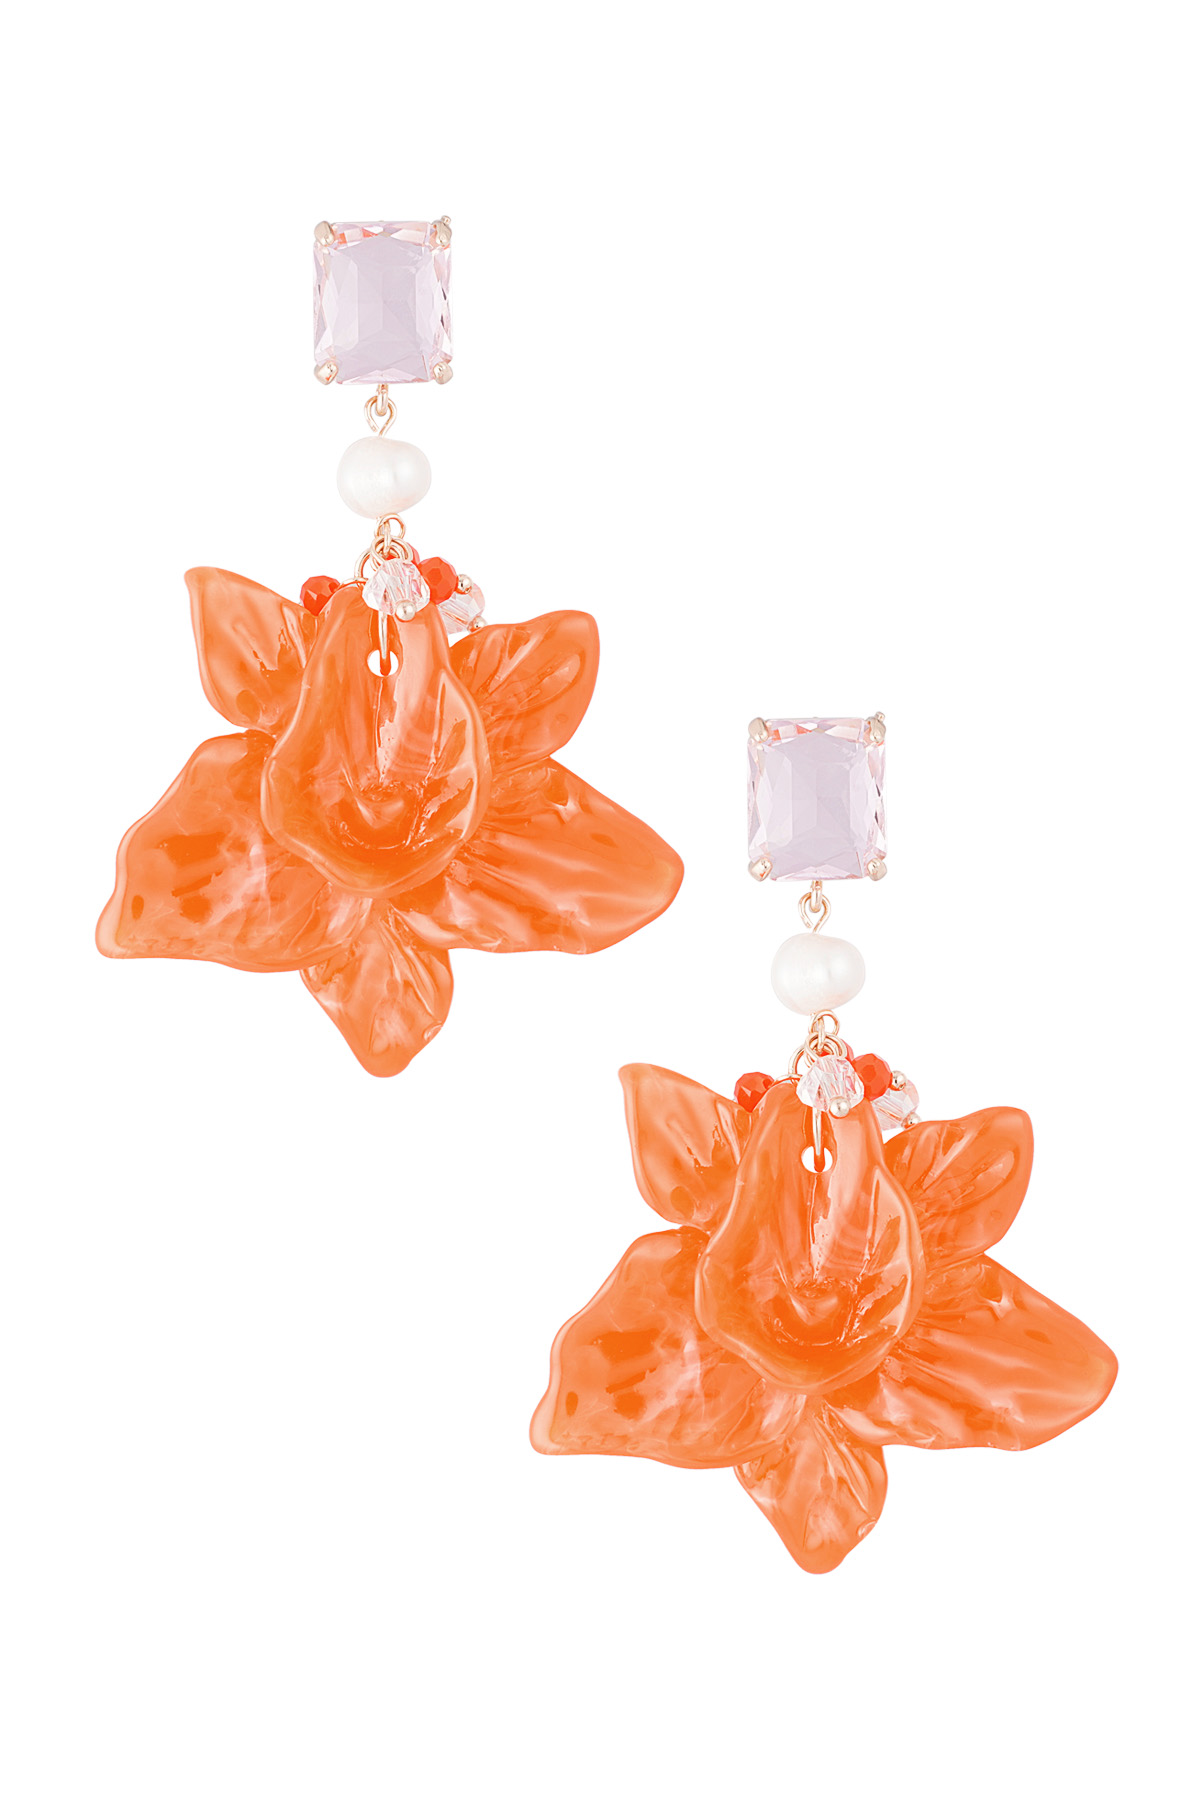 Florale Perlen-Party-Ohrringe – orange/rosa 